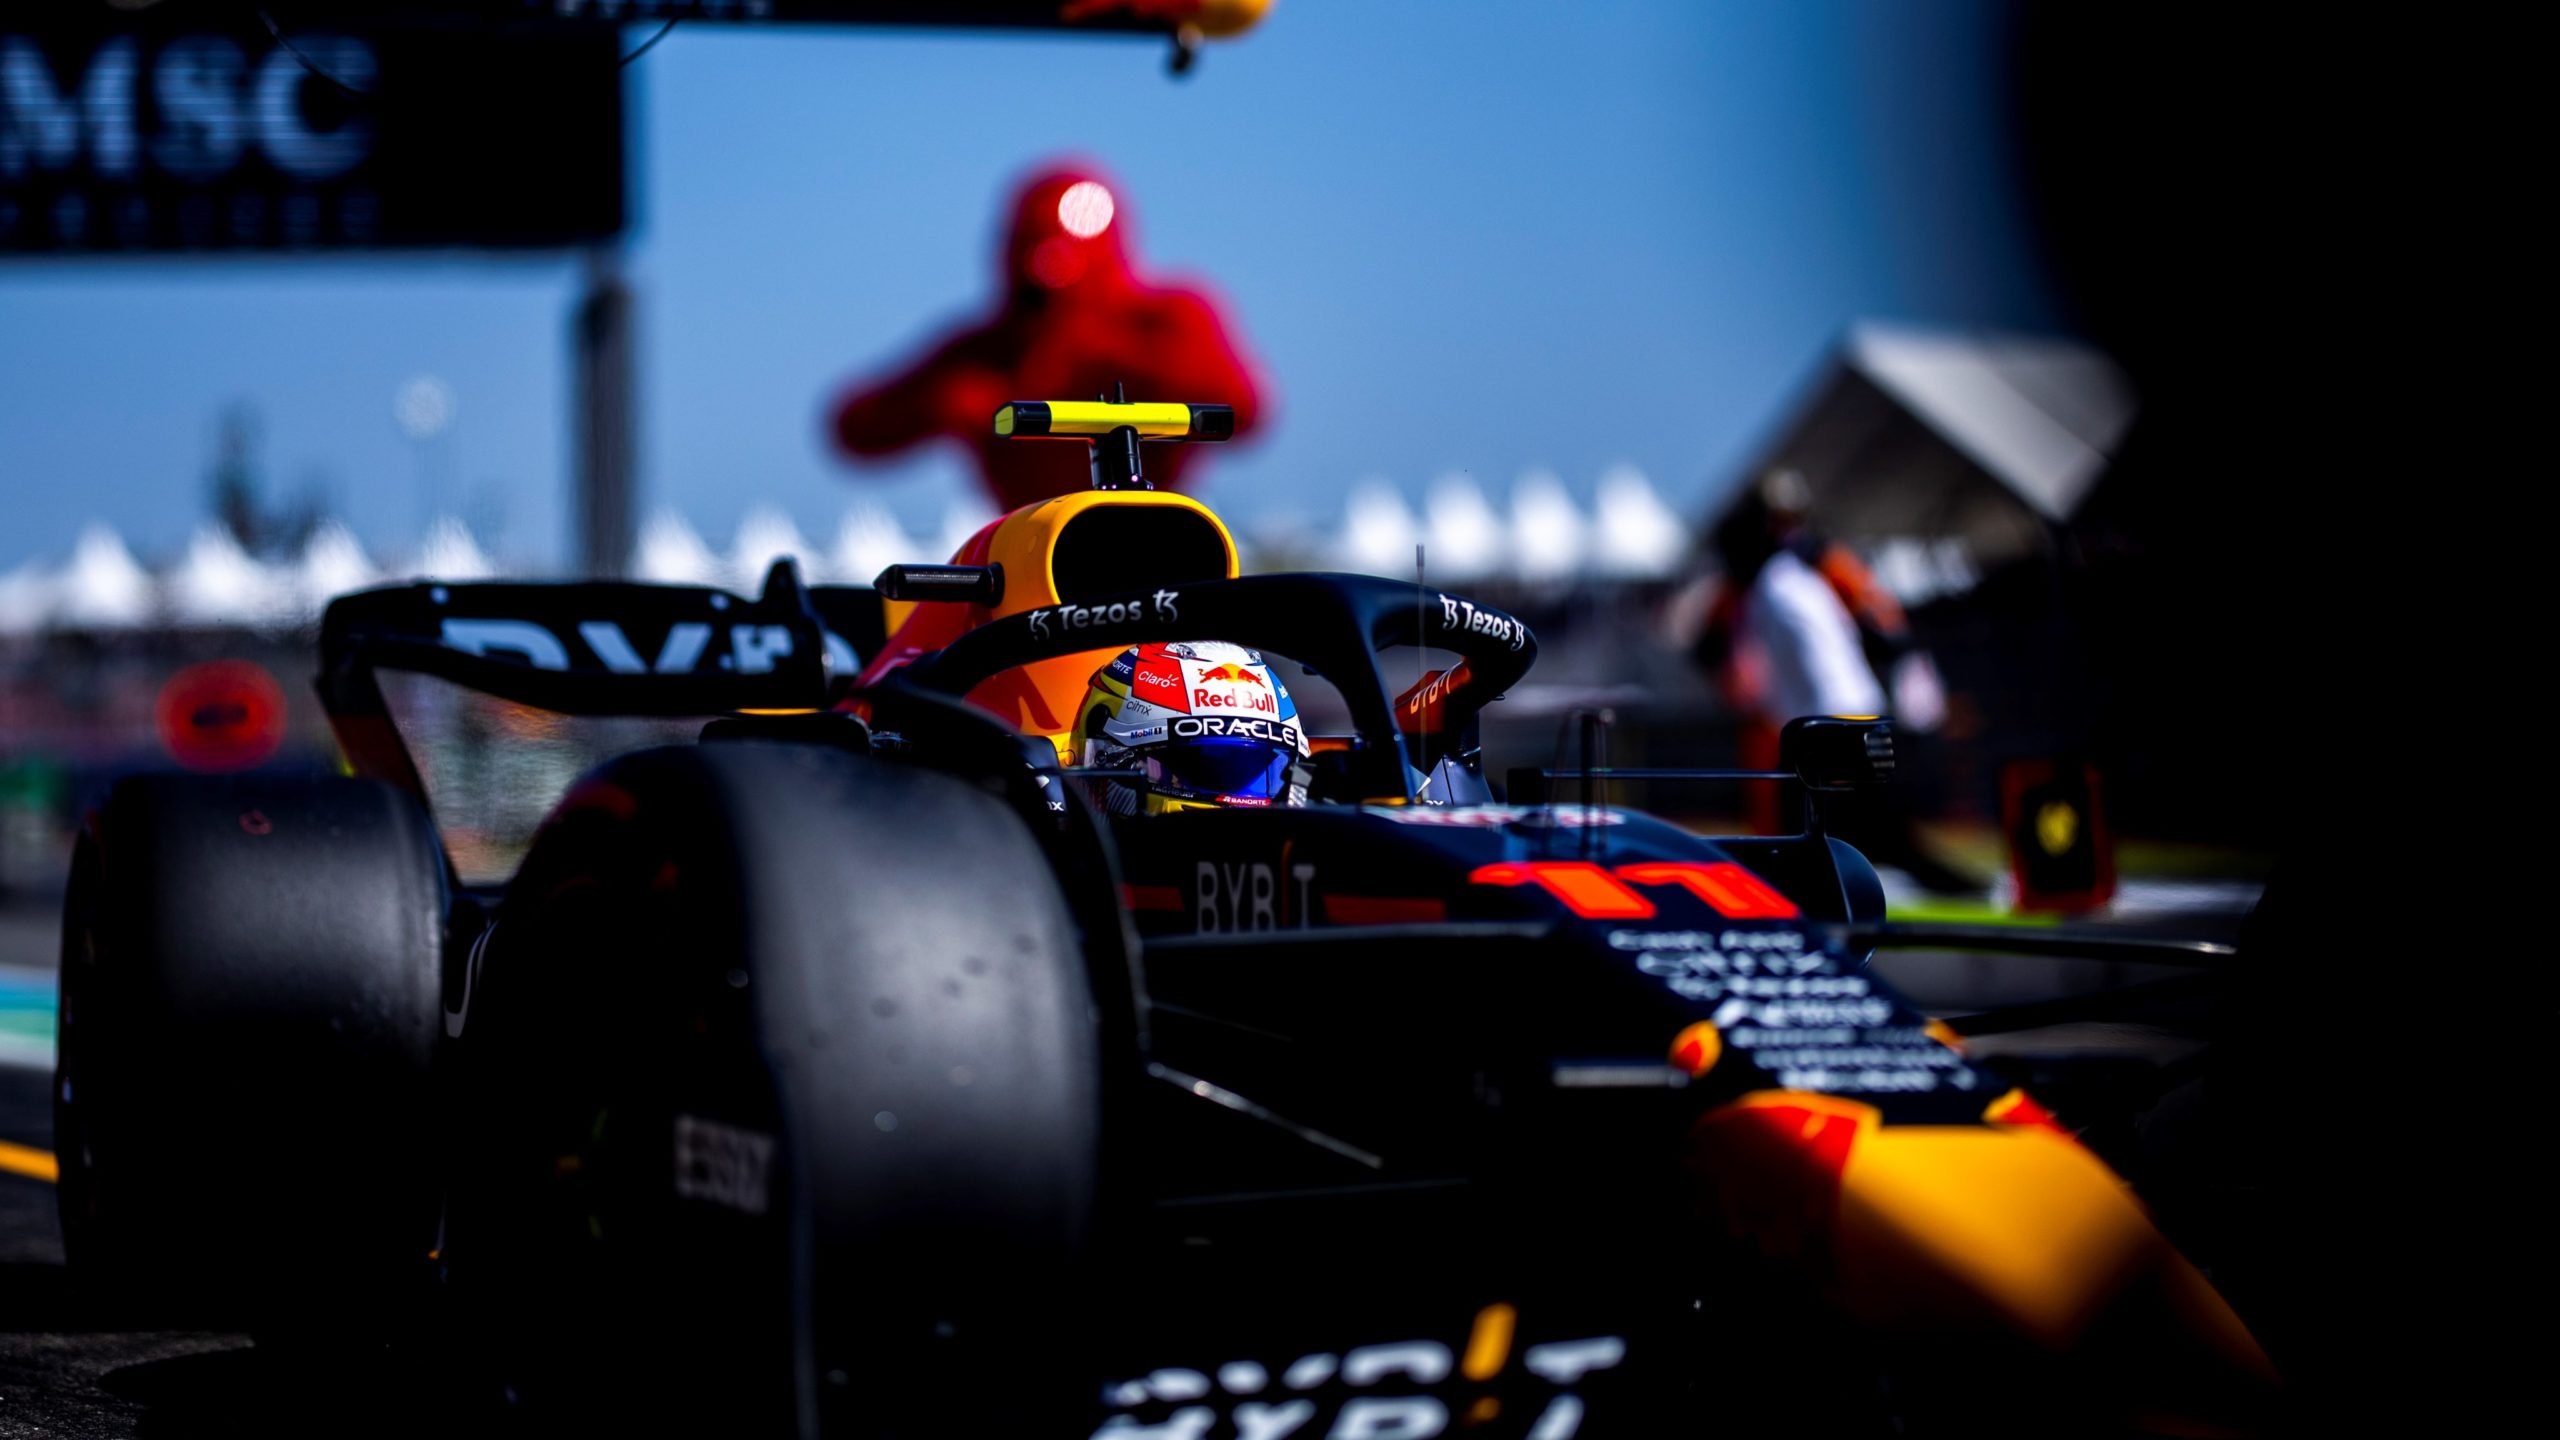 Report: Porsche will buy 50% of Red Bull Racing F1 team